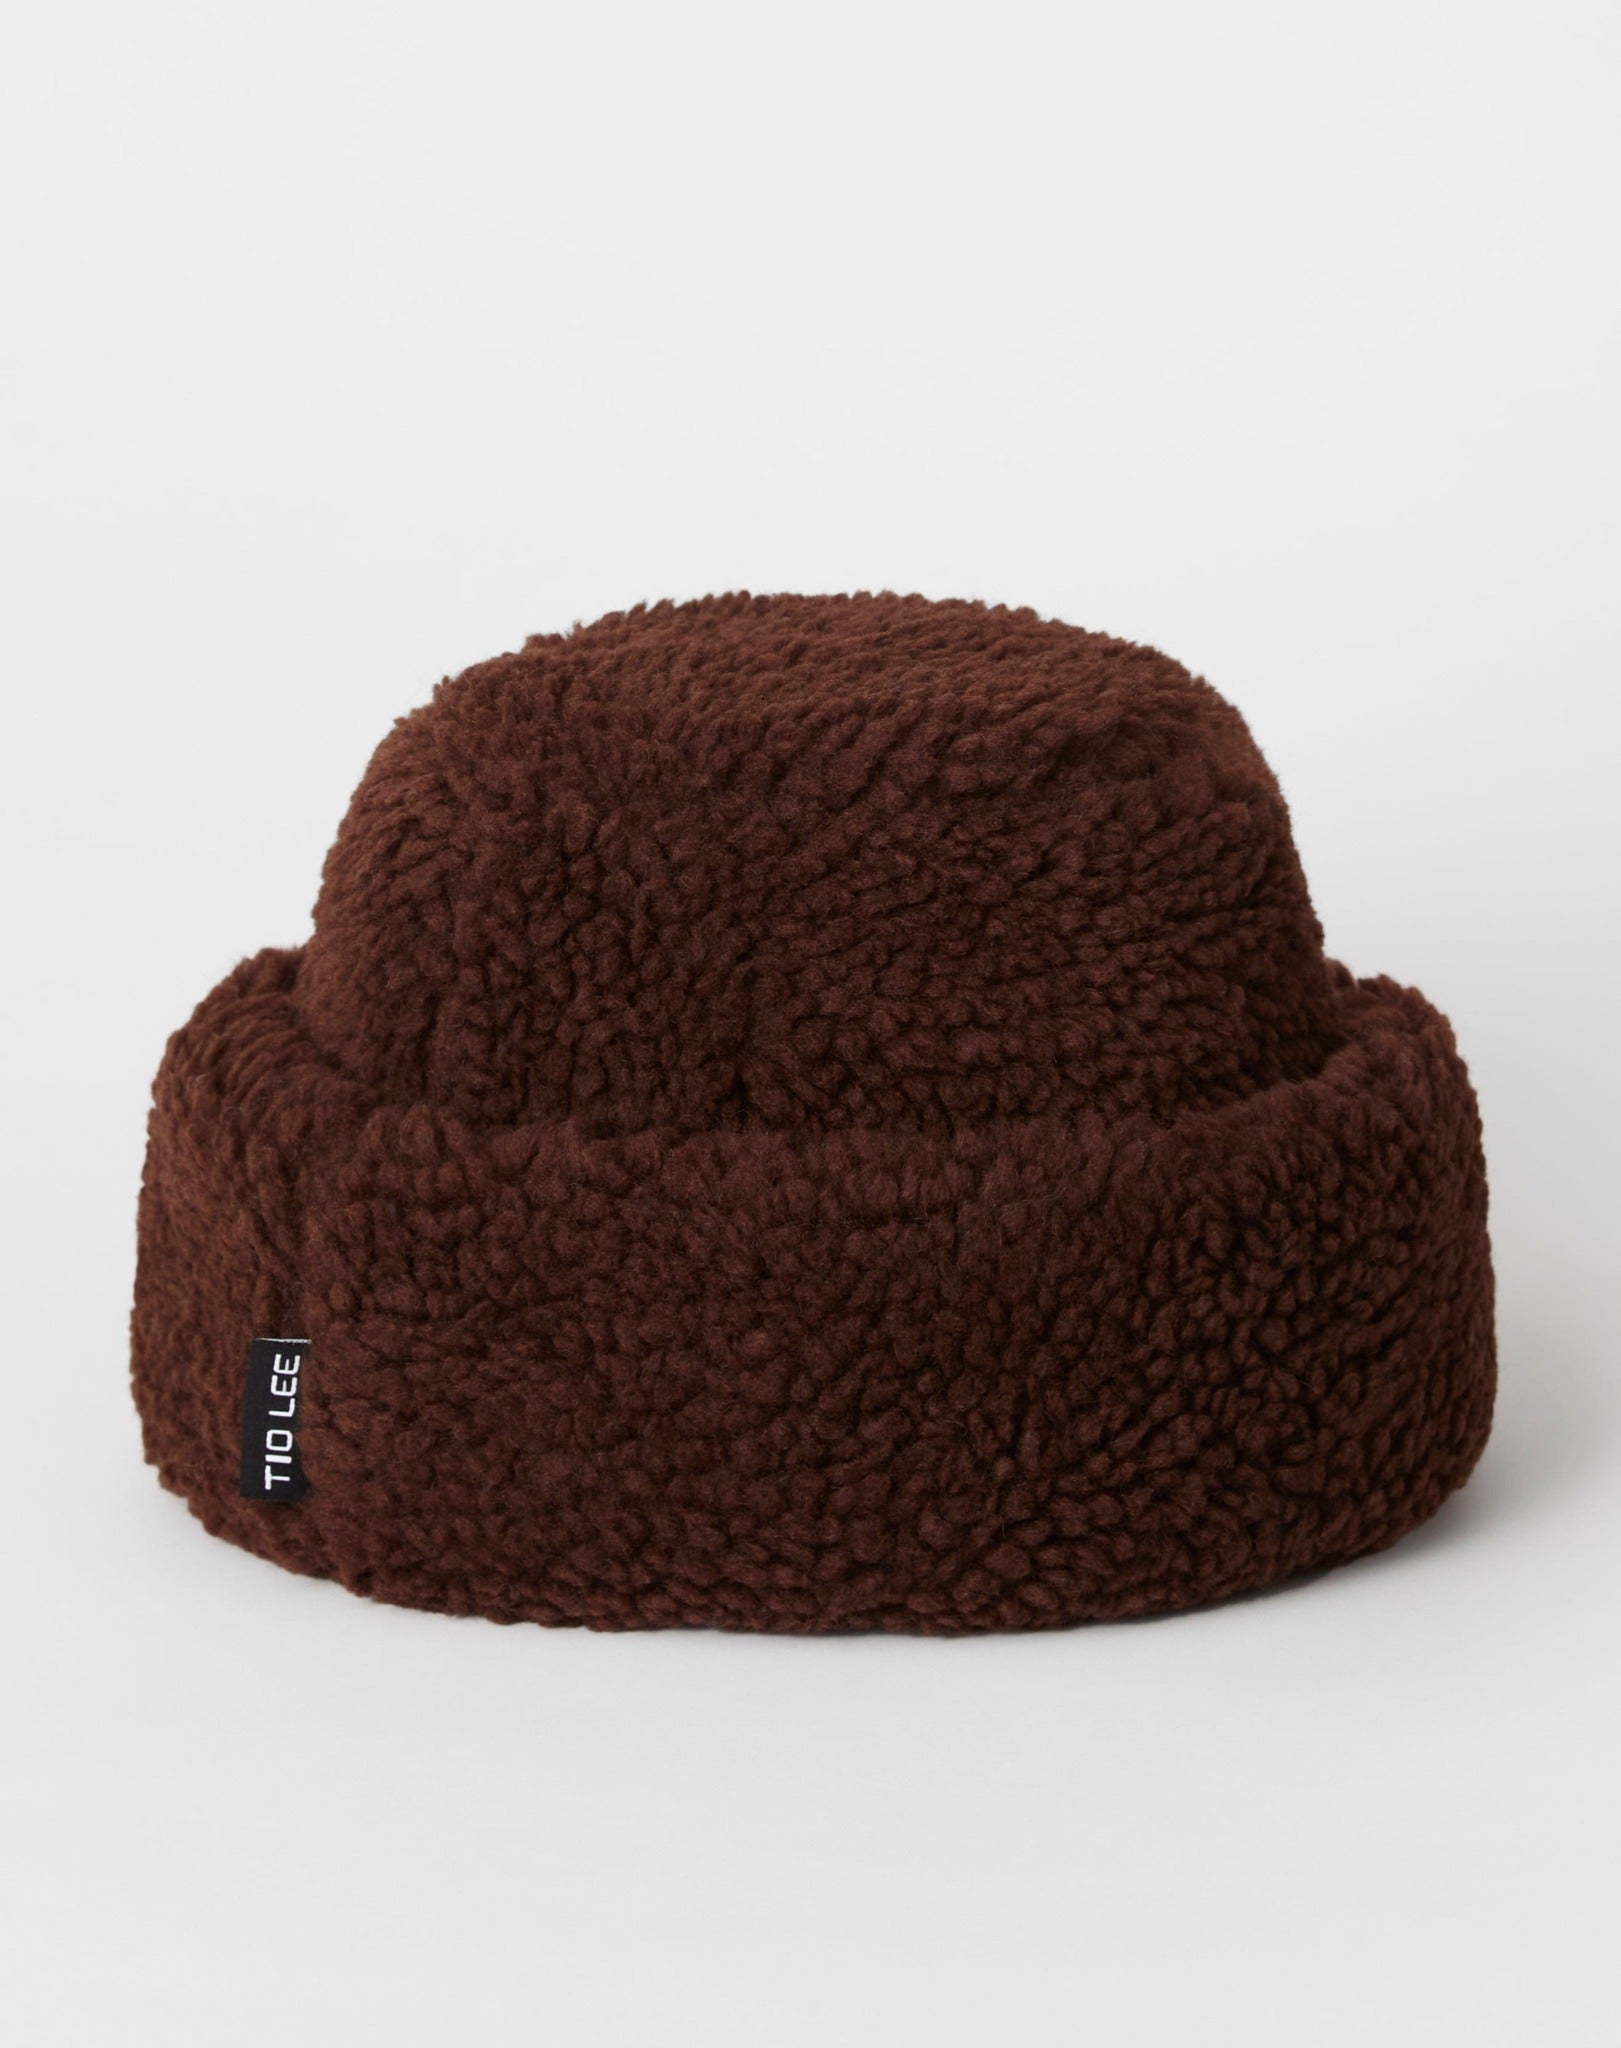 The Fargo Hat